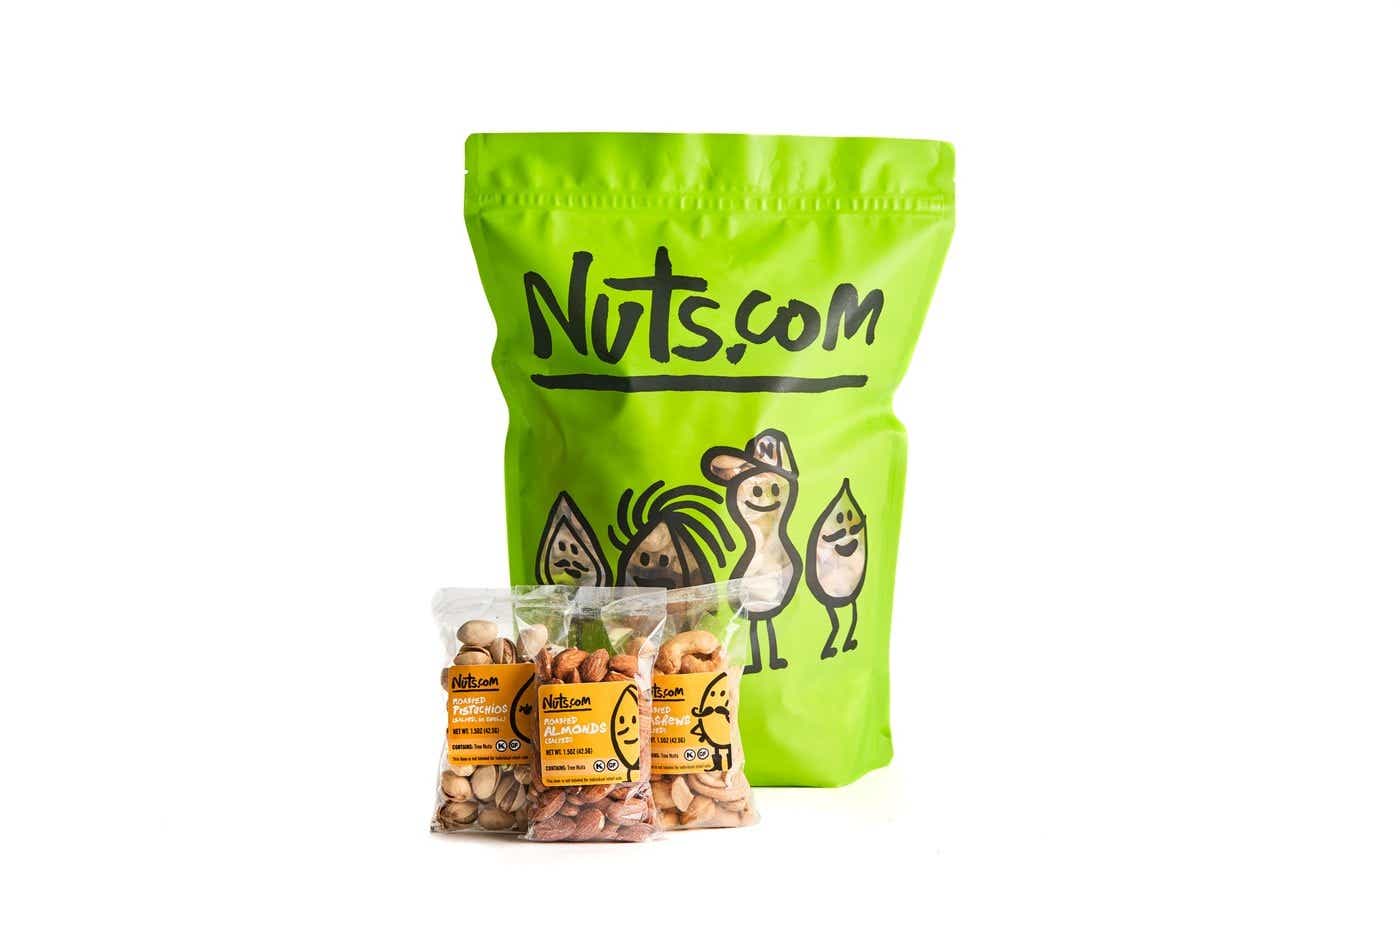 Nuts.com dried fruit sampler